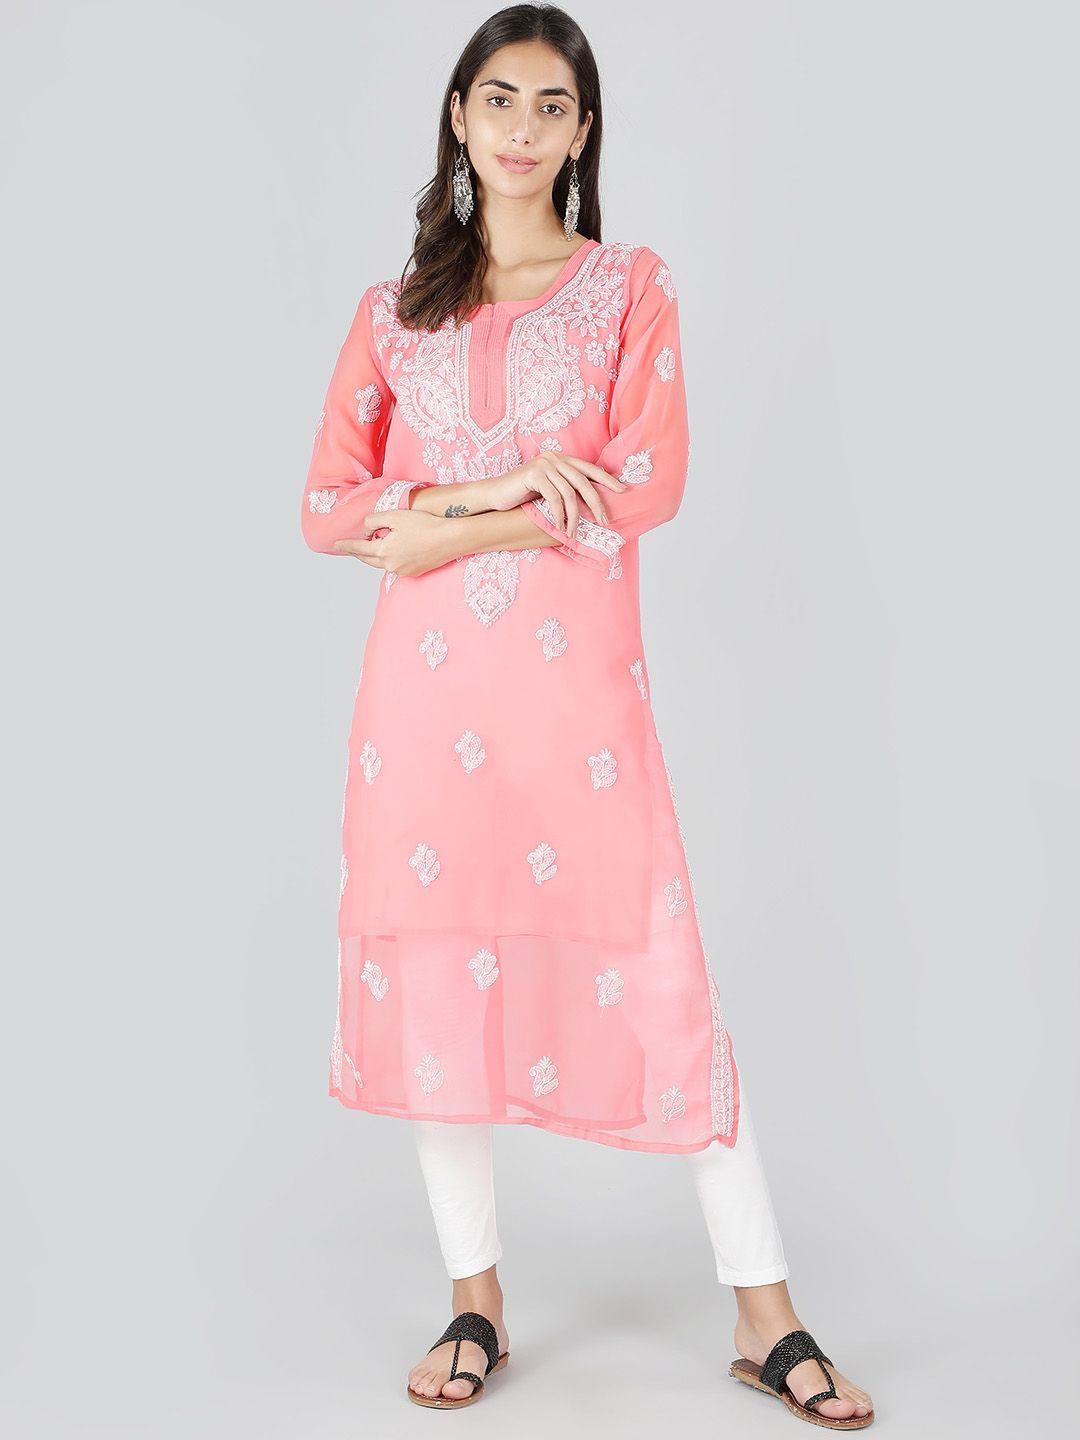 ethnava women pink ethnic motifs printed chikankari handloom georgette kurta